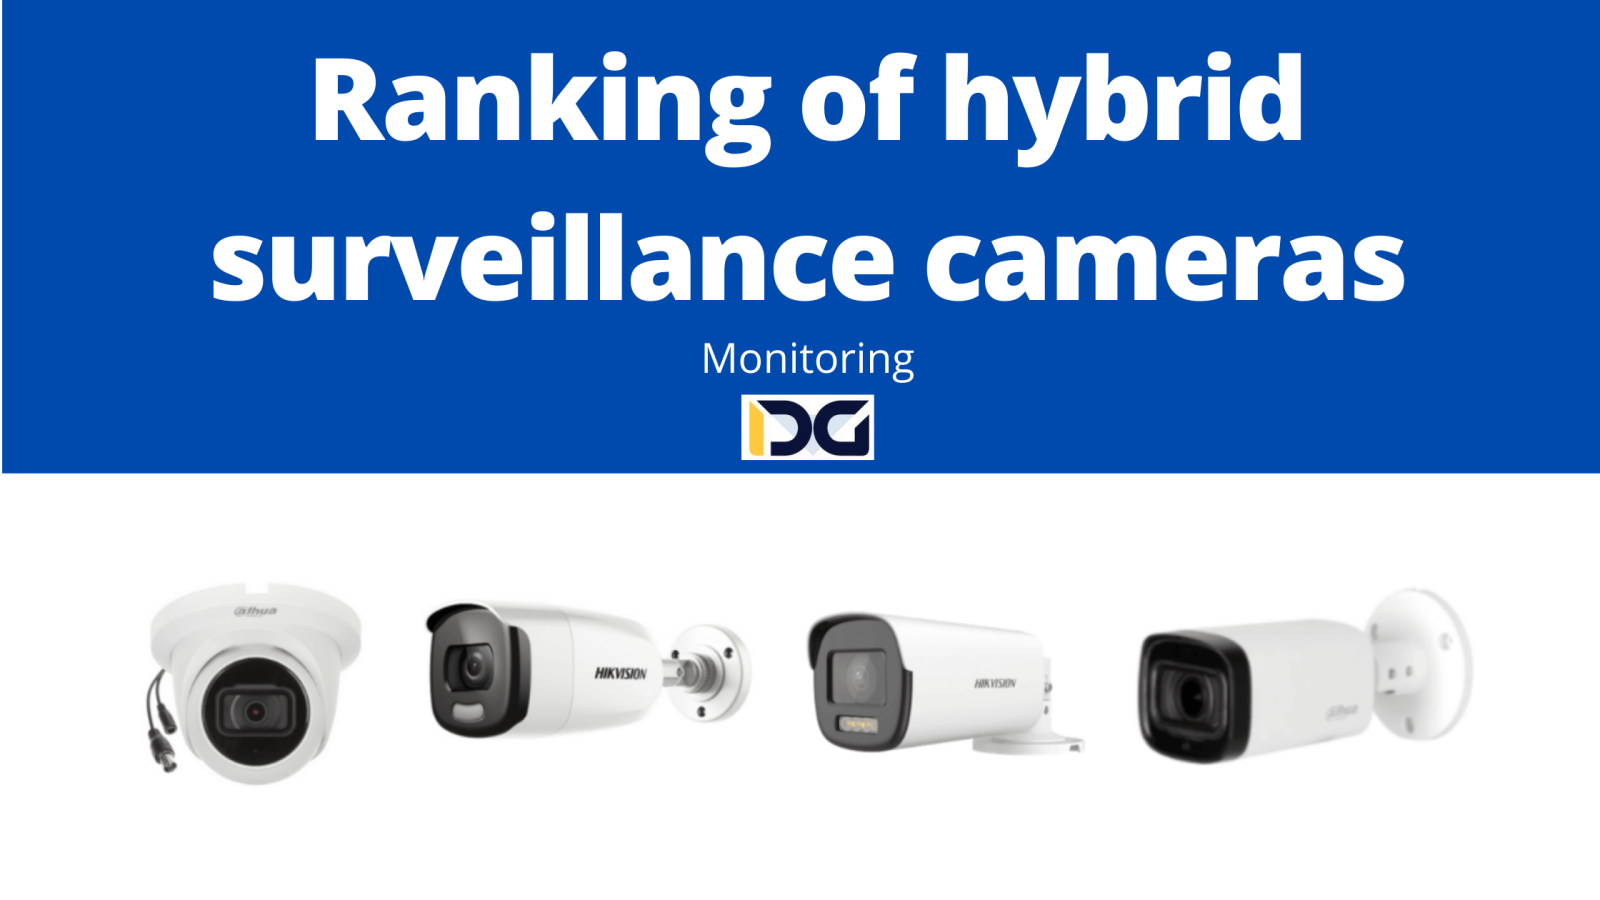 Ranking of hybrid surveillance cameras: Top 6